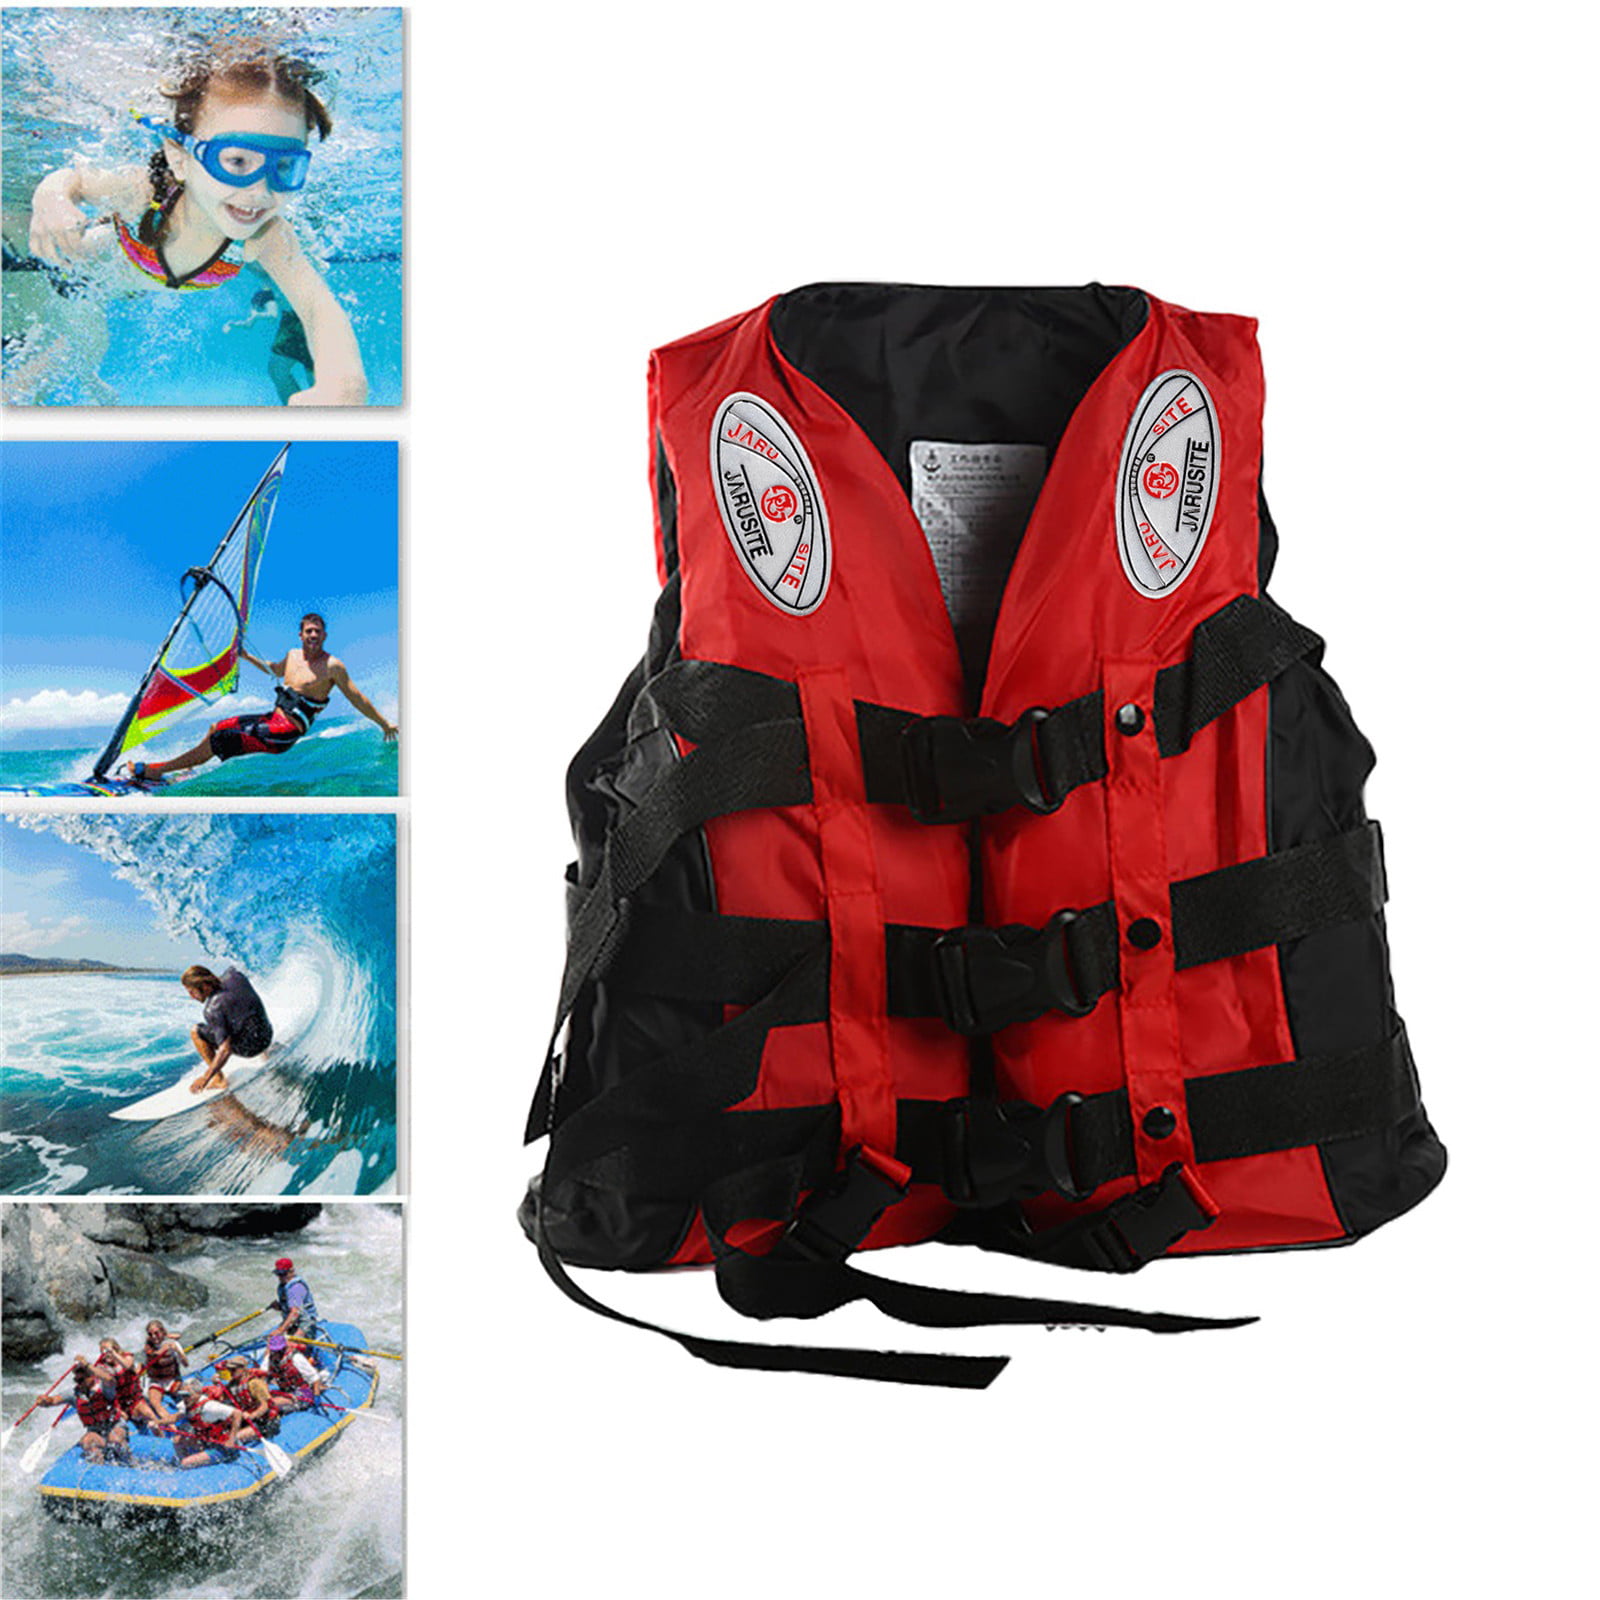 Neoprene Adult Life Jacket Kayak Ski Buoyancy Aid Vest Sailing Boating Jacket 